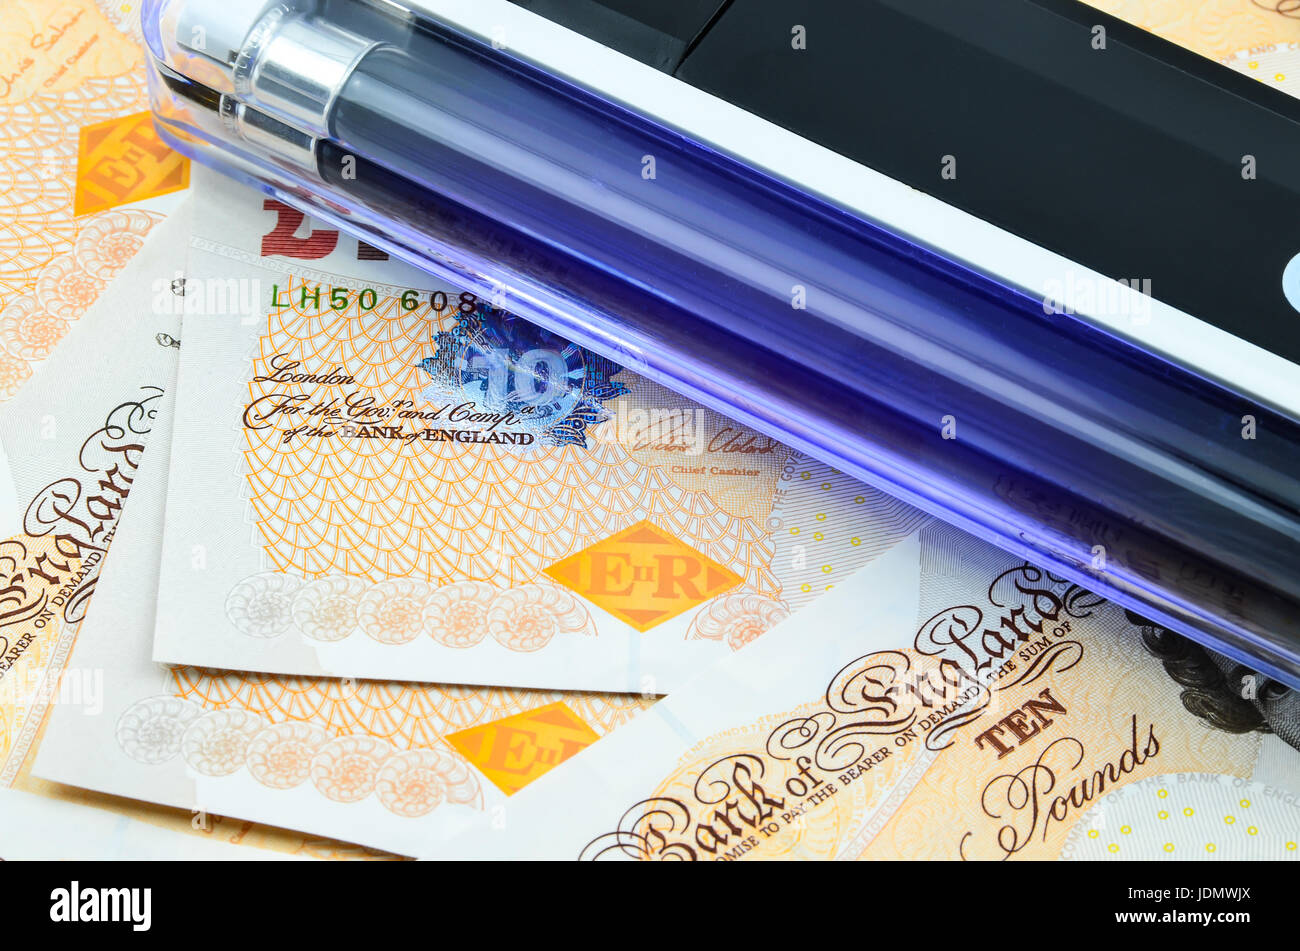 Handheld UV light over banknotes Stock Photo